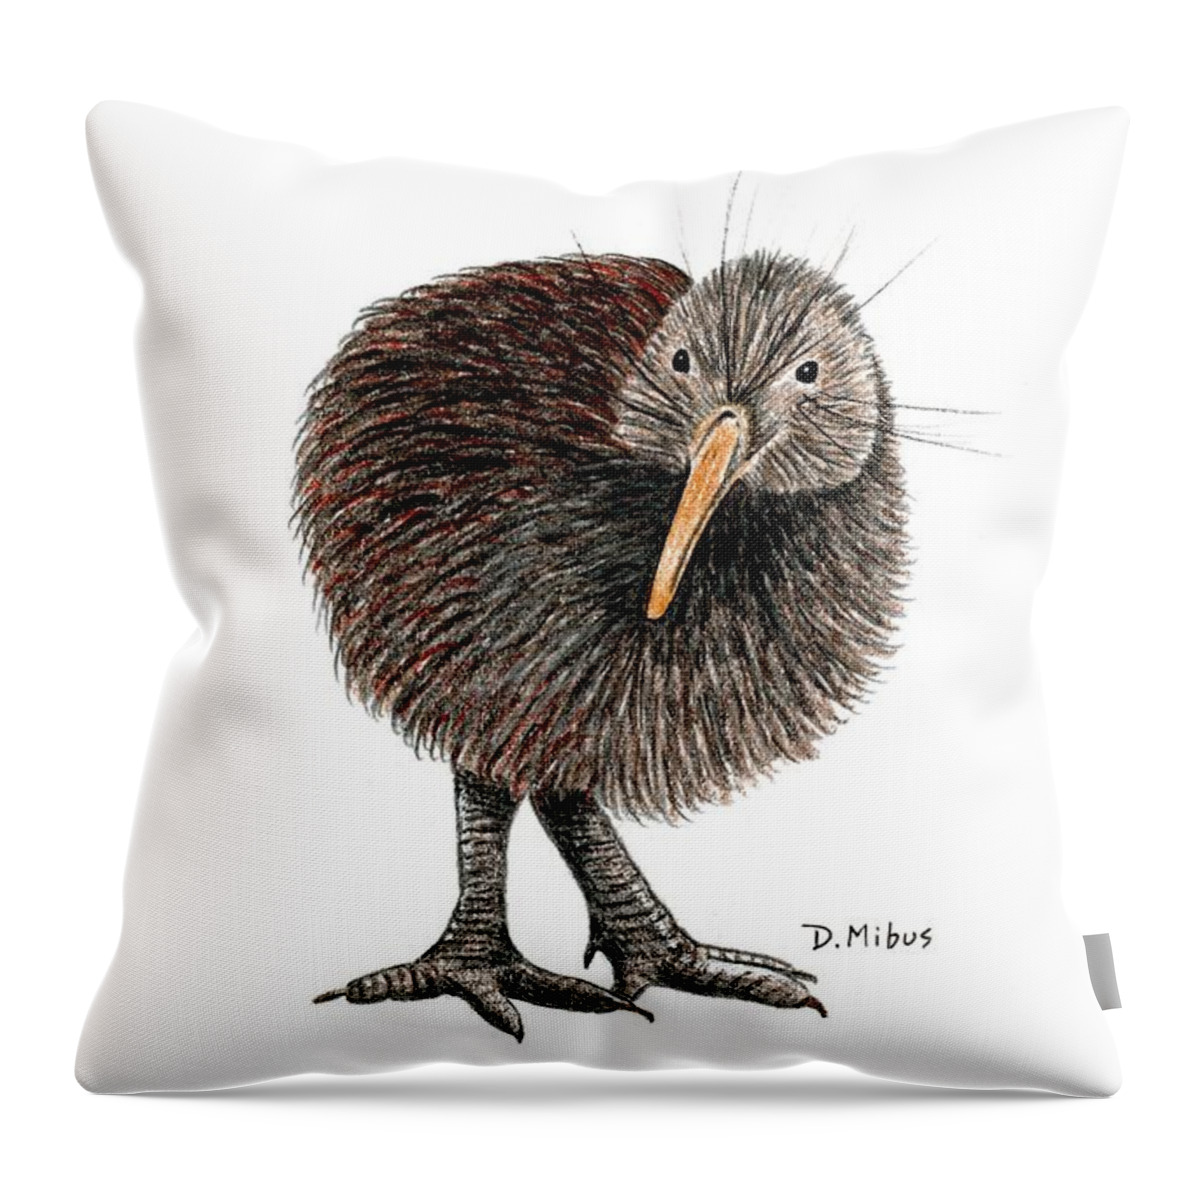 New Zealand Bird Throw Pillow featuring the drawing Kiwi Bird of New Zealand by Donna Mibus